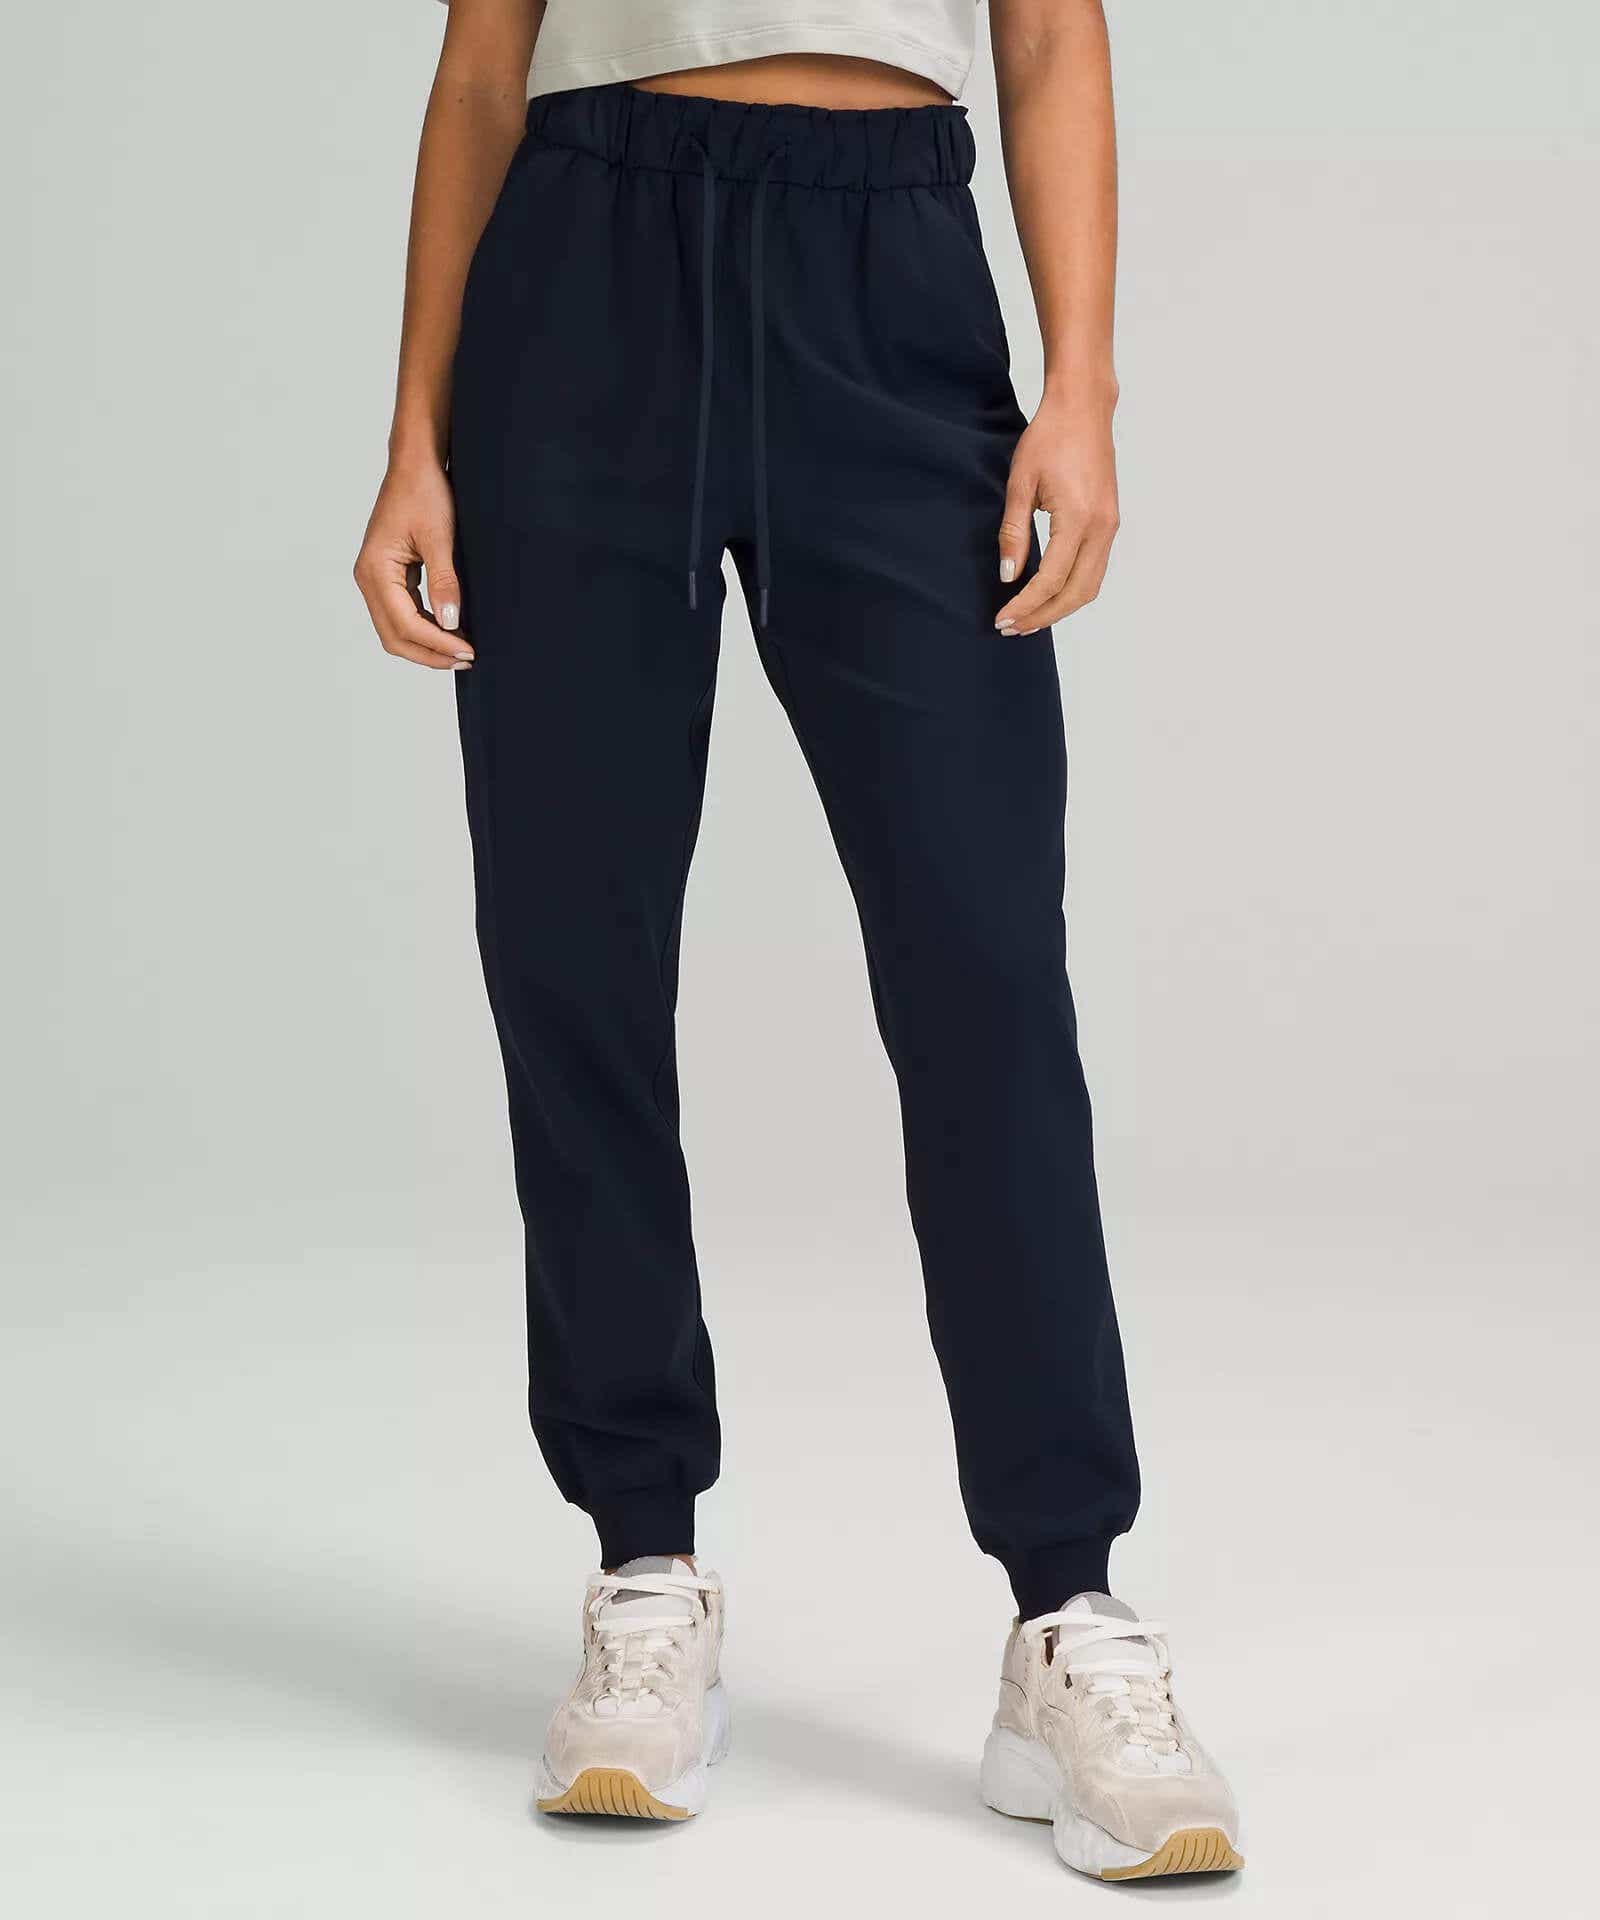 navy blue jogger pants on model